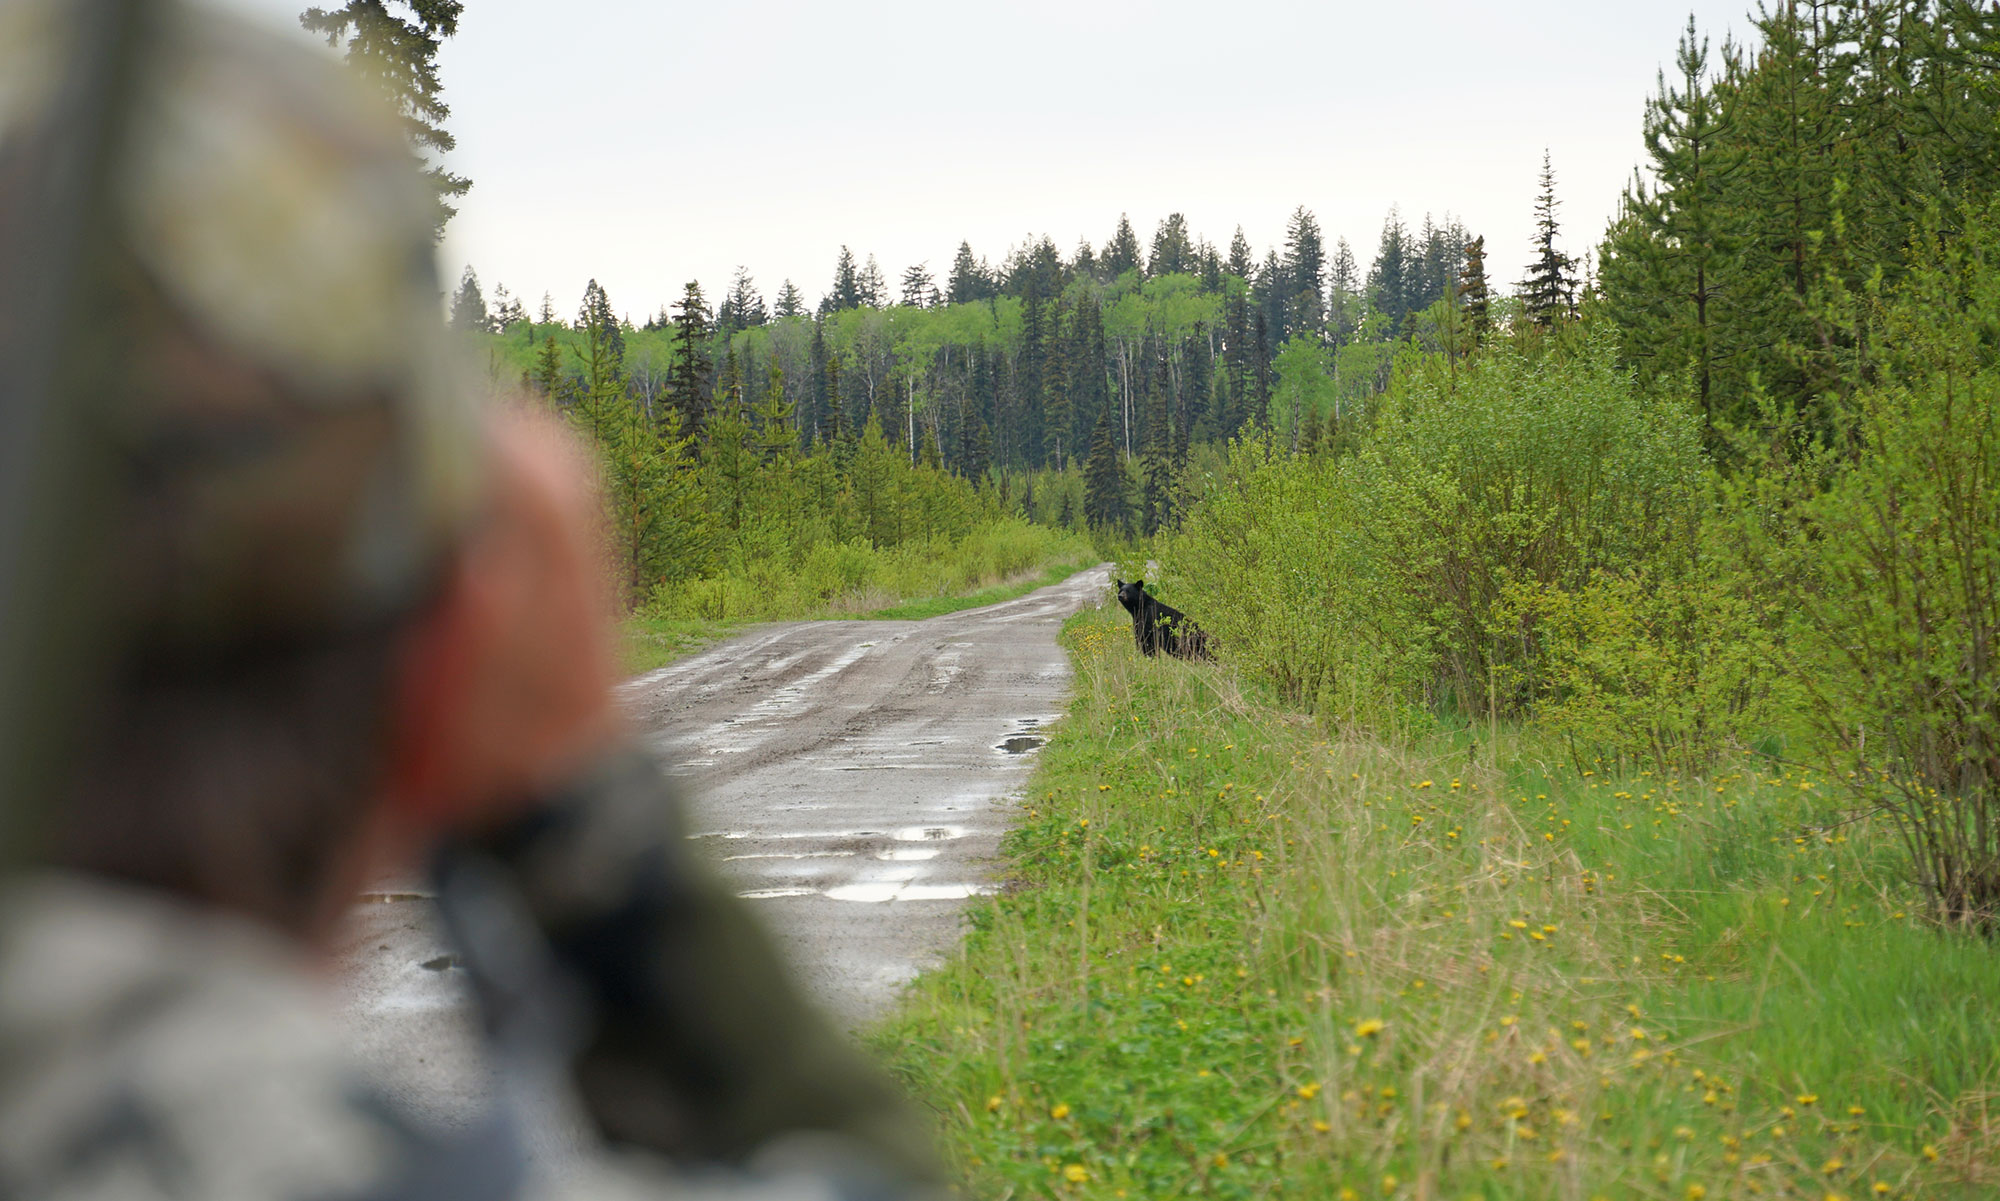 Black Bear Hunting photo